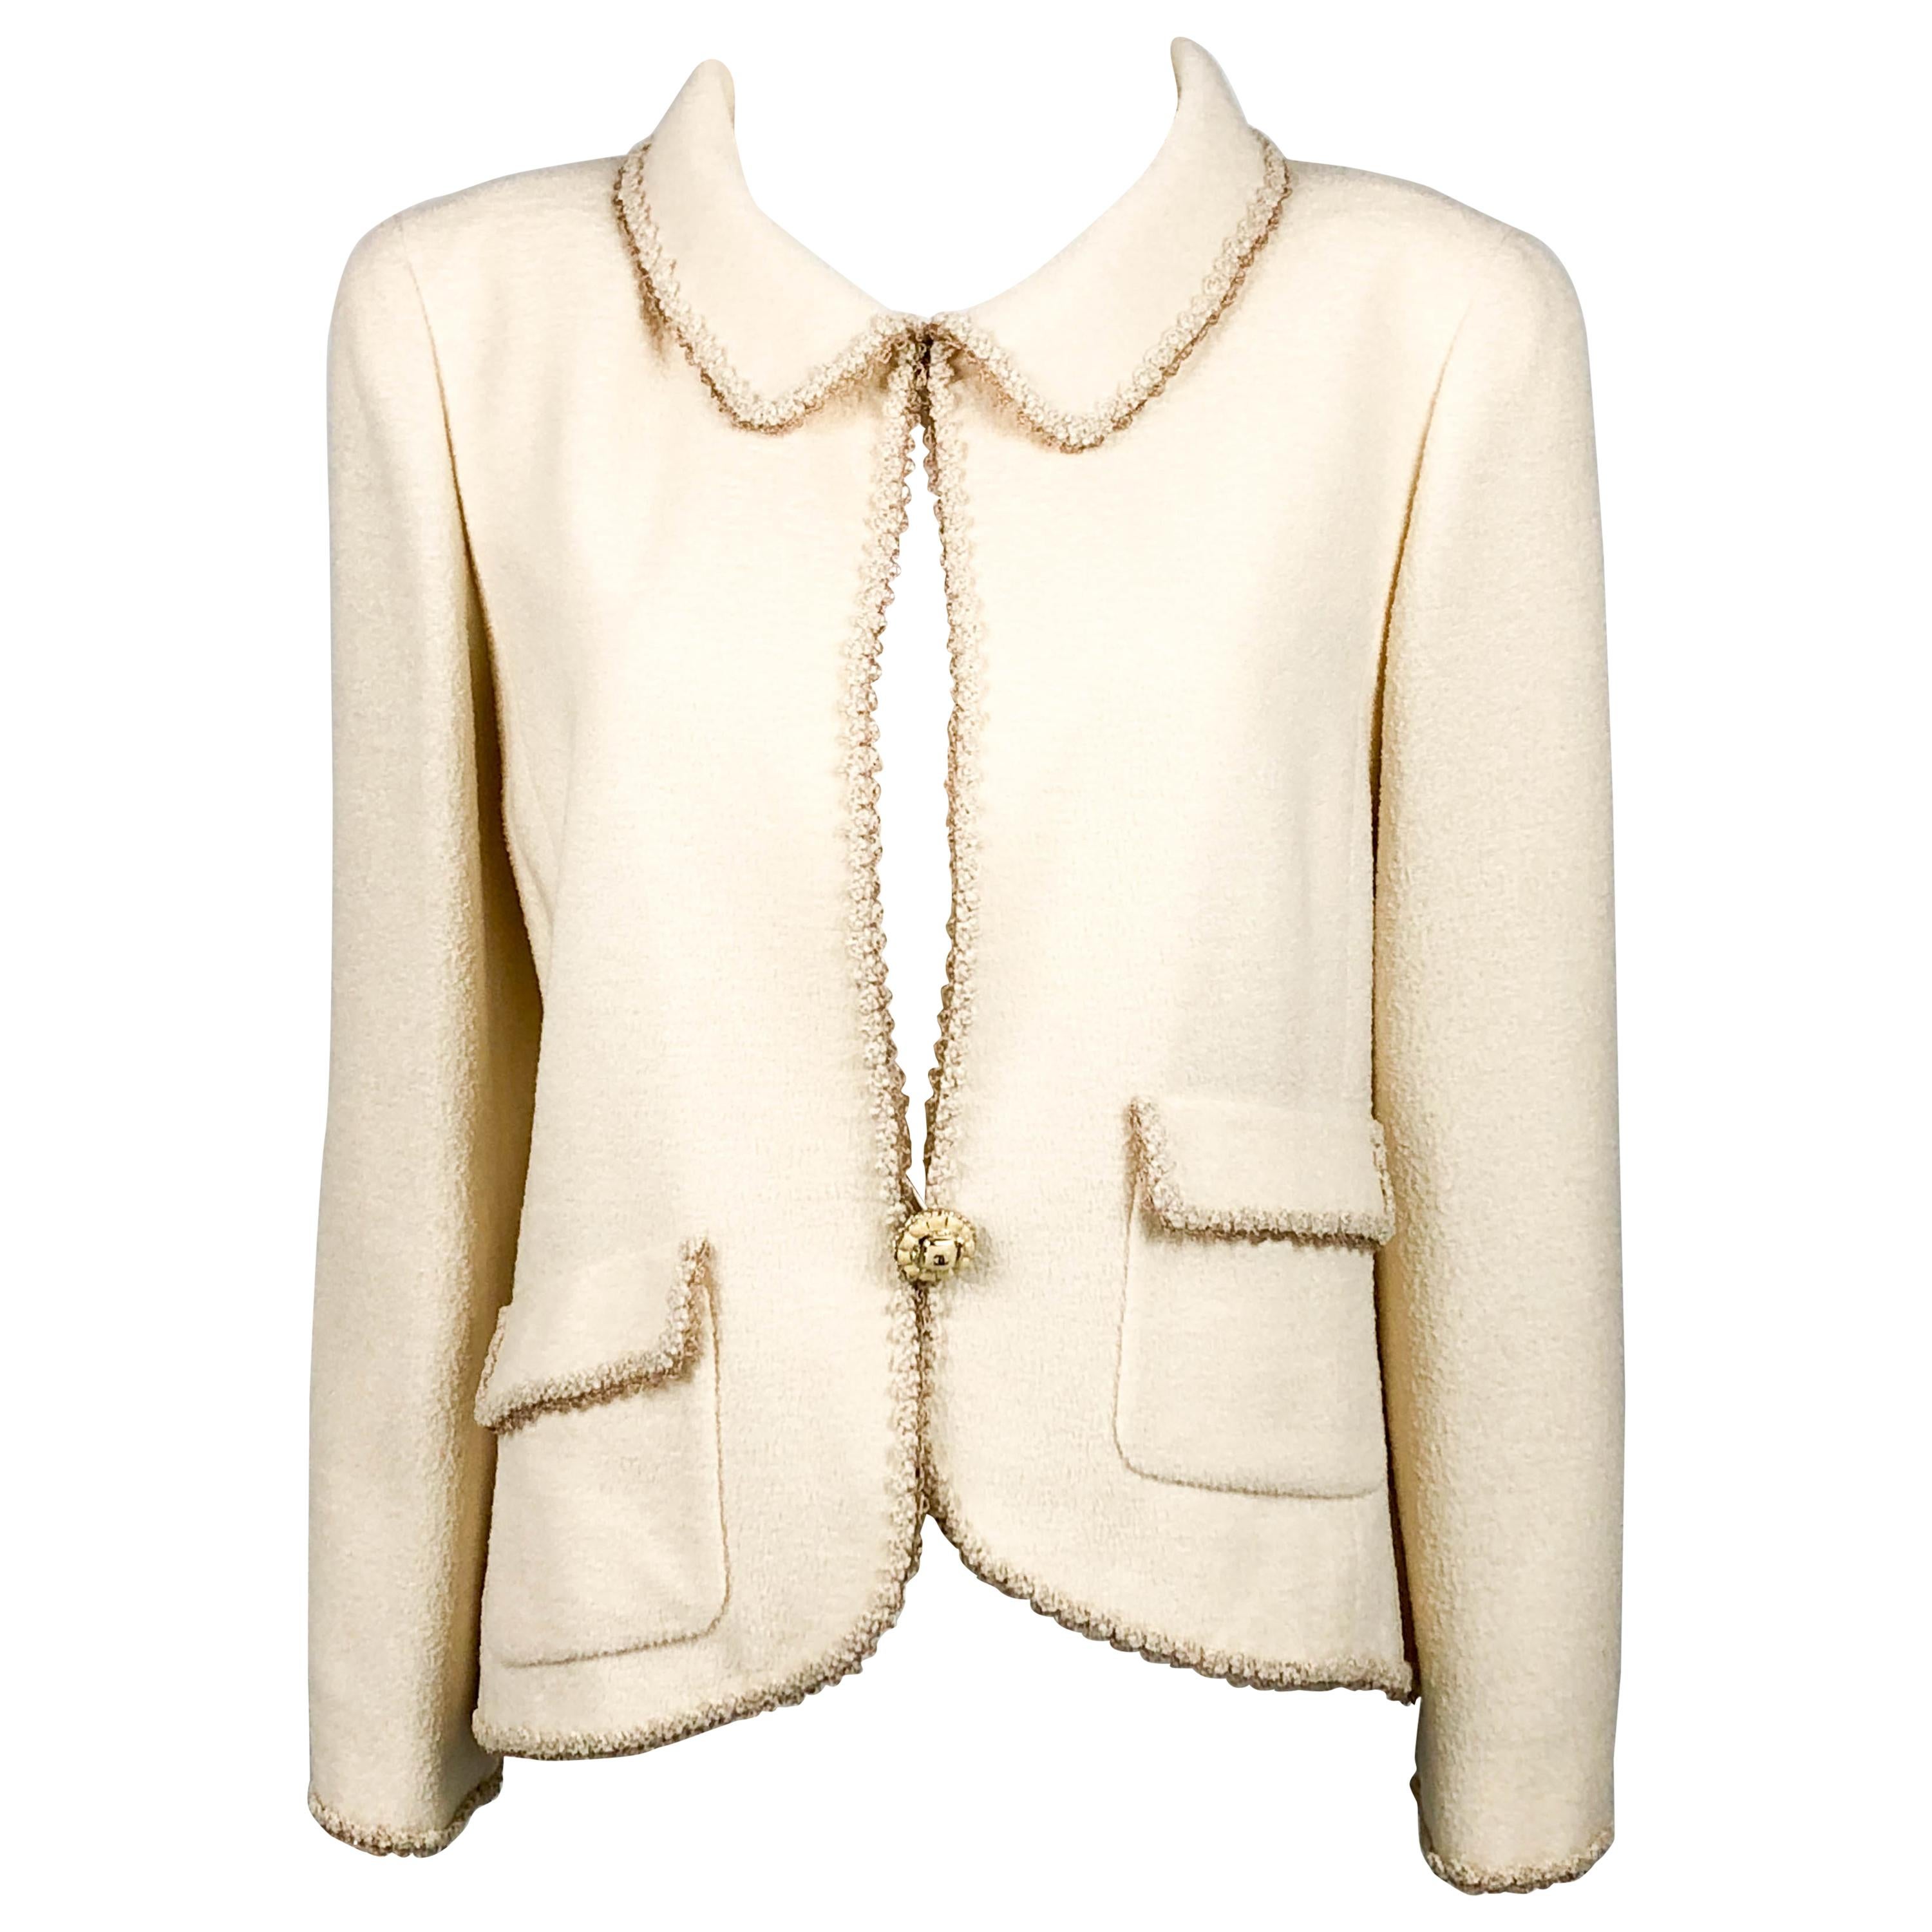 2010 Chanel Unworn Runway Look Cream Jacket With Gold Thread Trim For Sale